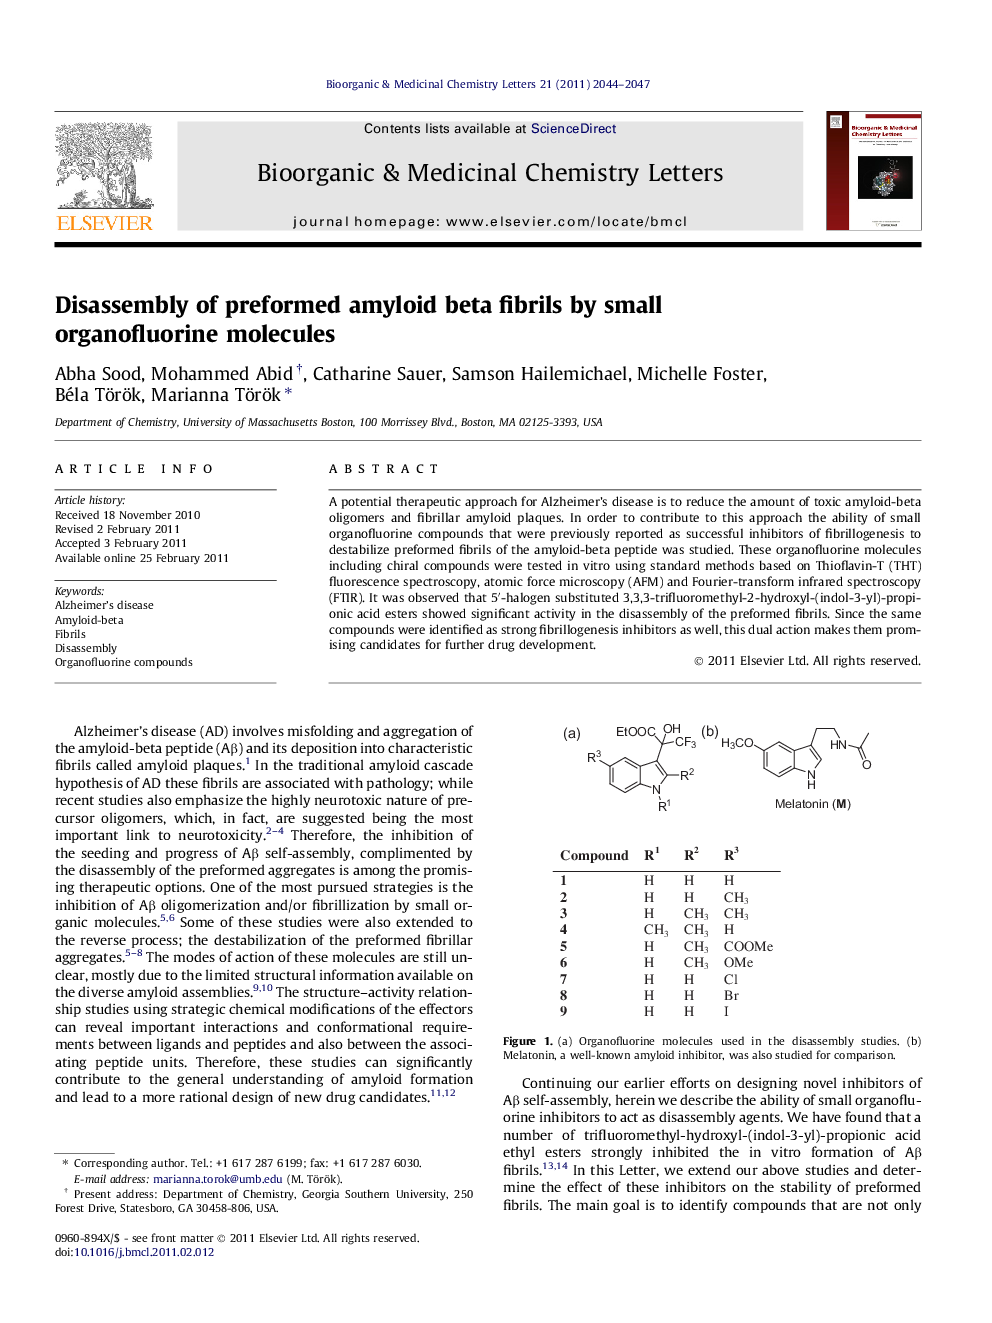 Disassembly of preformed amyloid beta fibrils by small organofluorine molecules